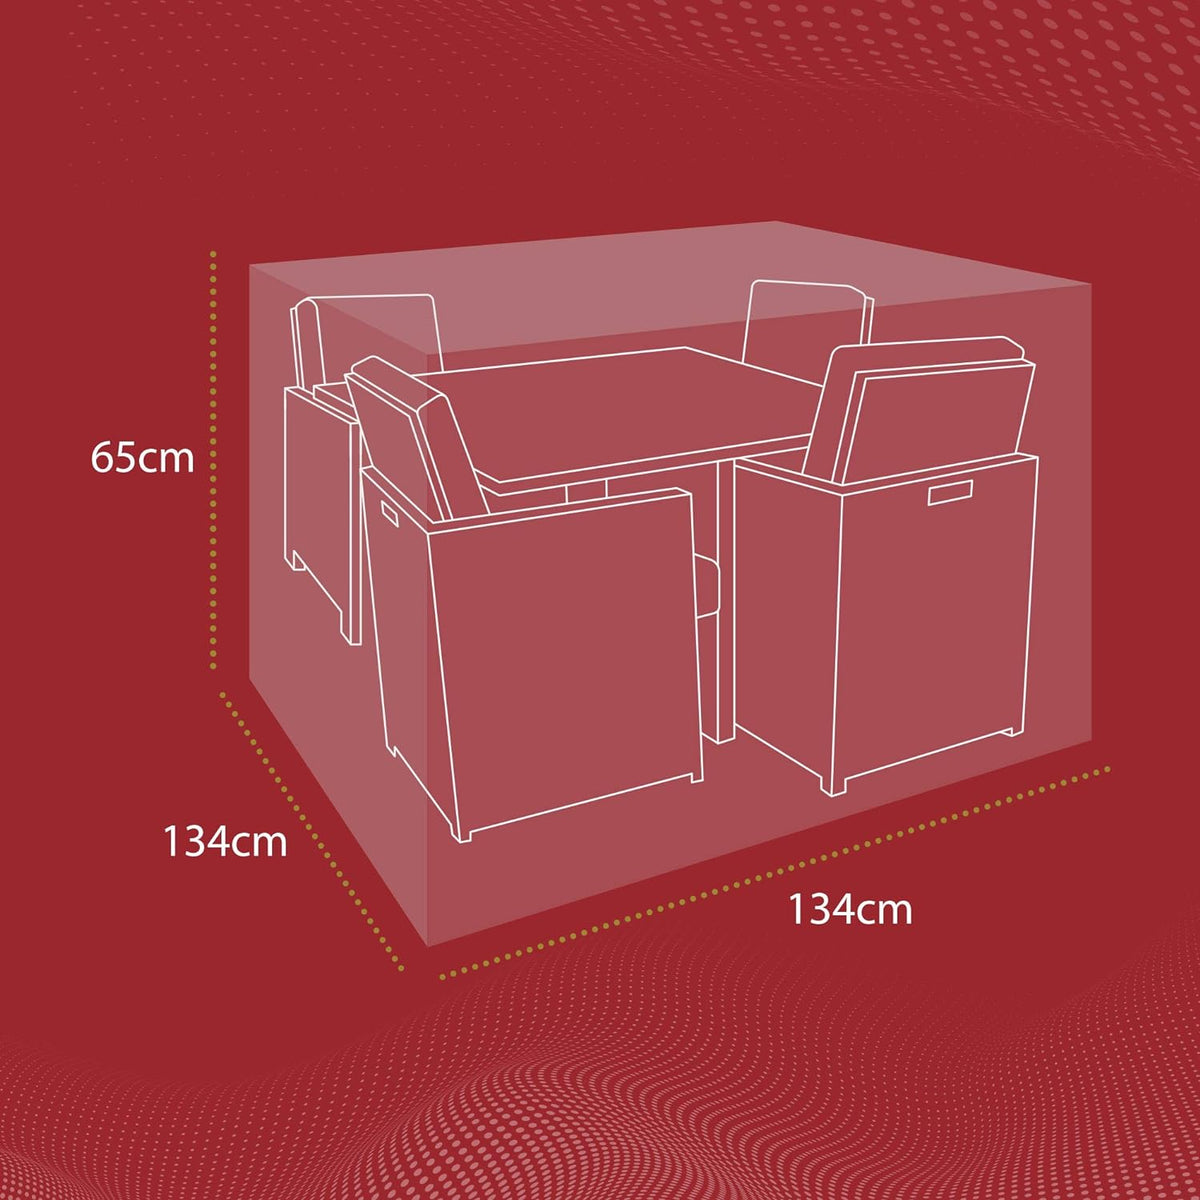 Modular Cube Patio Furniture Set Cover